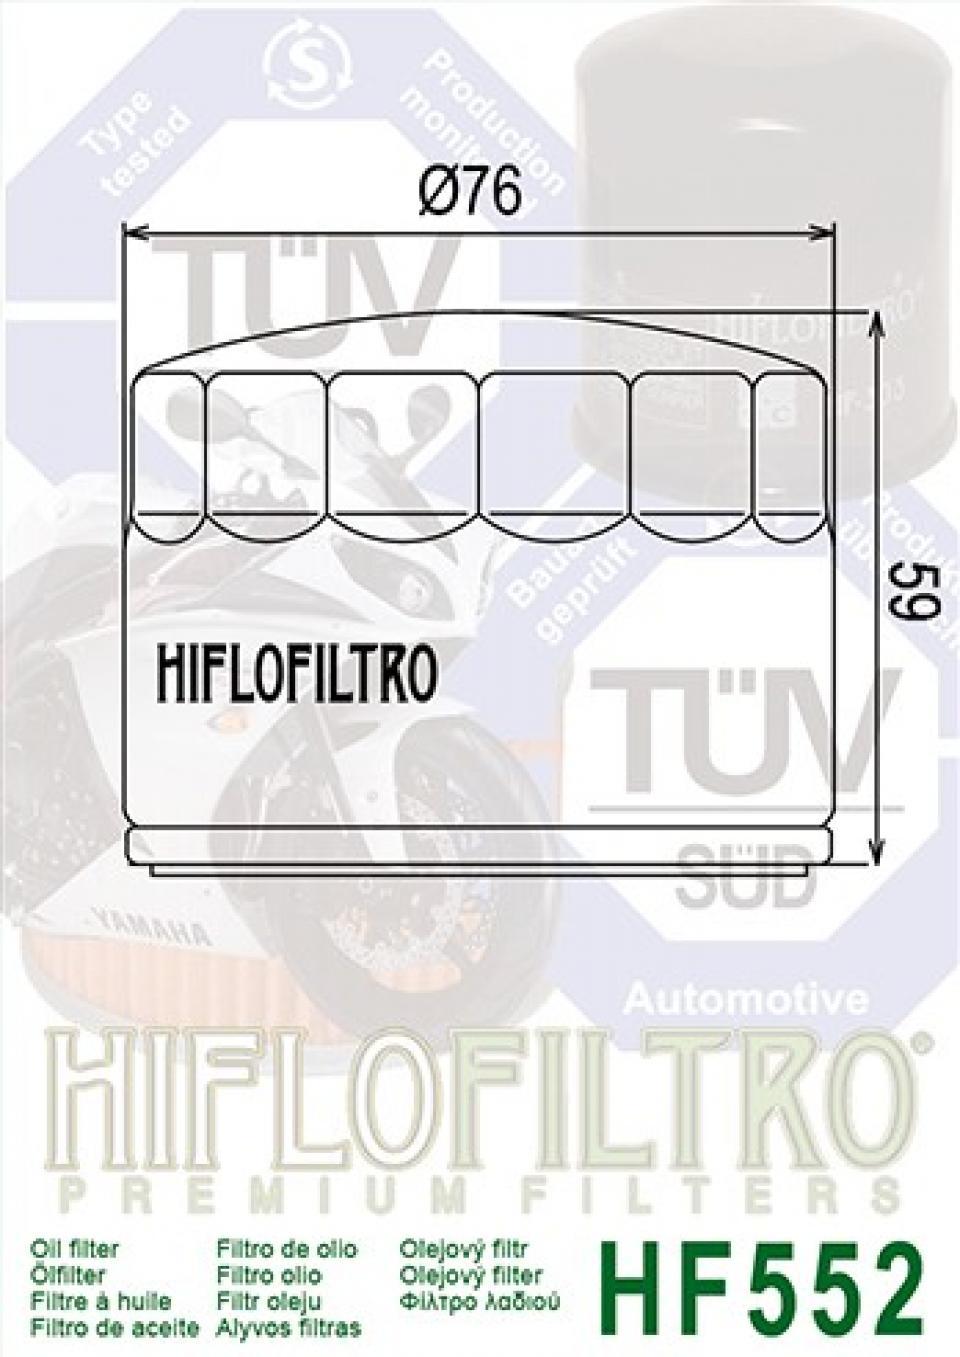 Filtre à huile Hiflo Filtro pour Moto pour Moto GUZZI 1000 Gt 1987-1993 Neuf